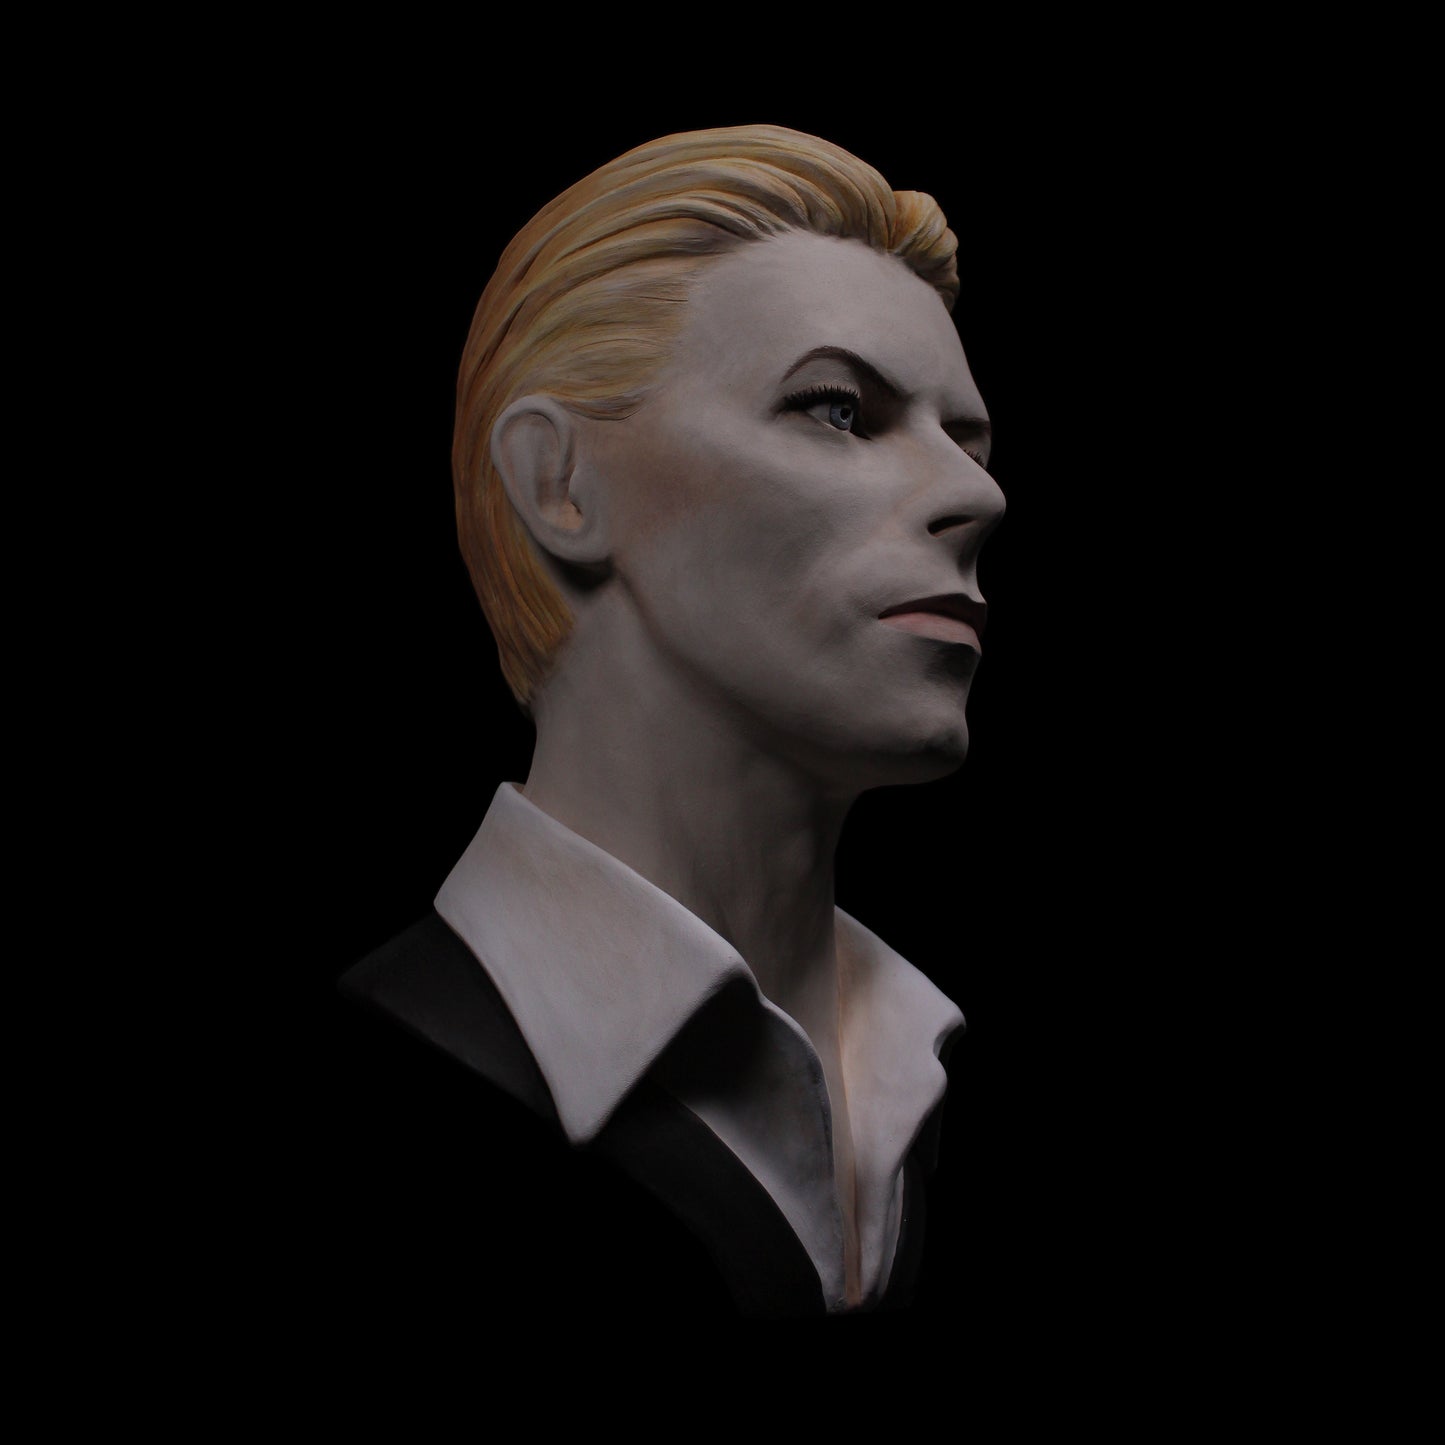 David Bowie - Ceramic Portrait Bust Sculpture - 'The Thin White Duke' - Full Head